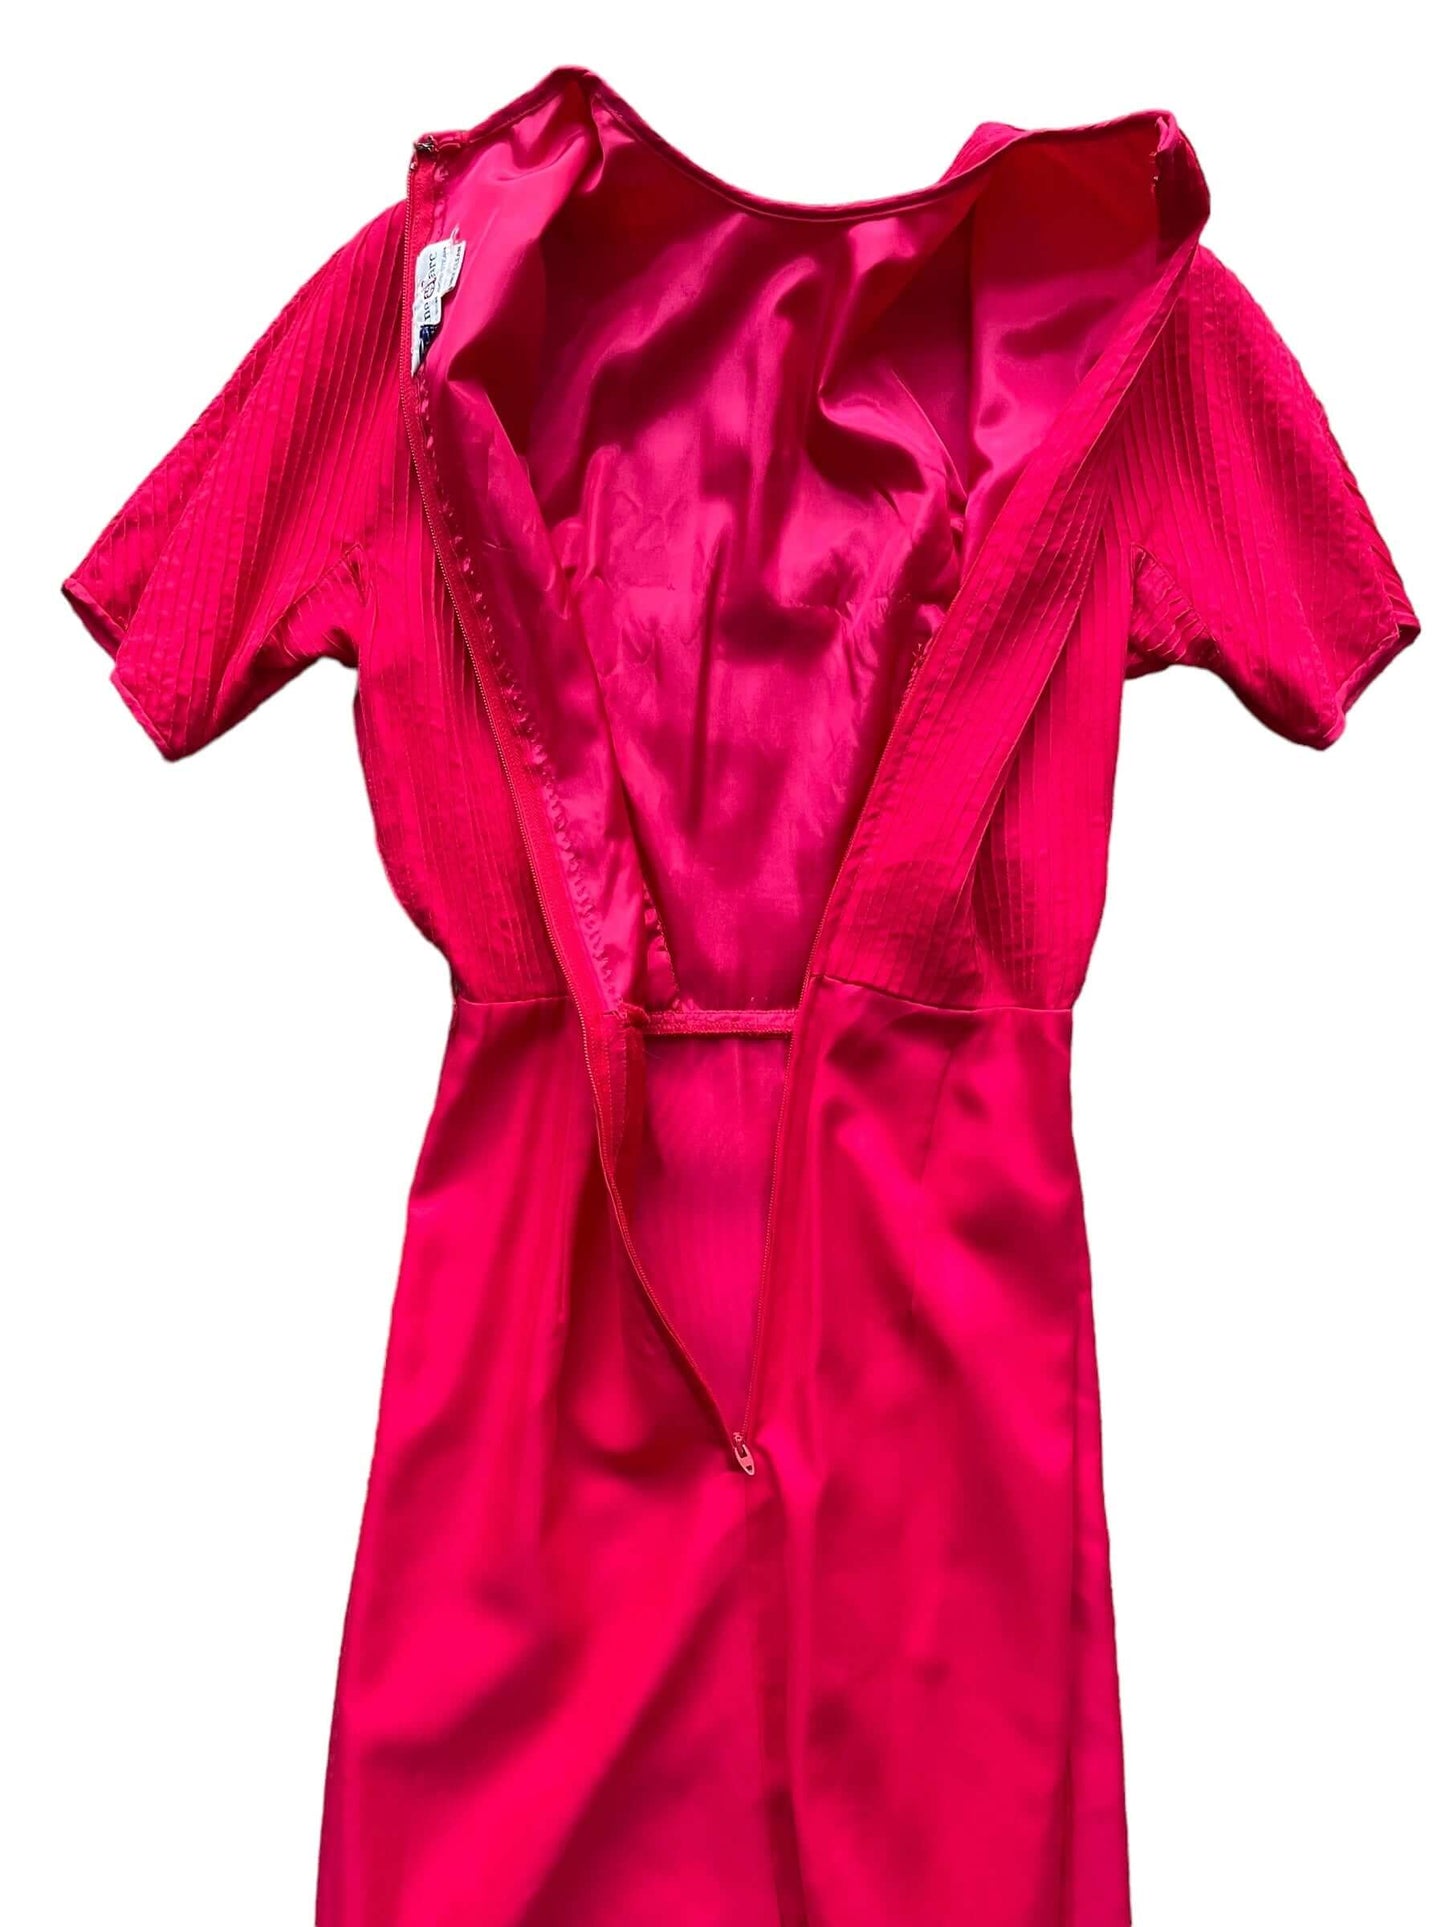 Open back view of 1960s Jean D'Arc Red Dress XXS